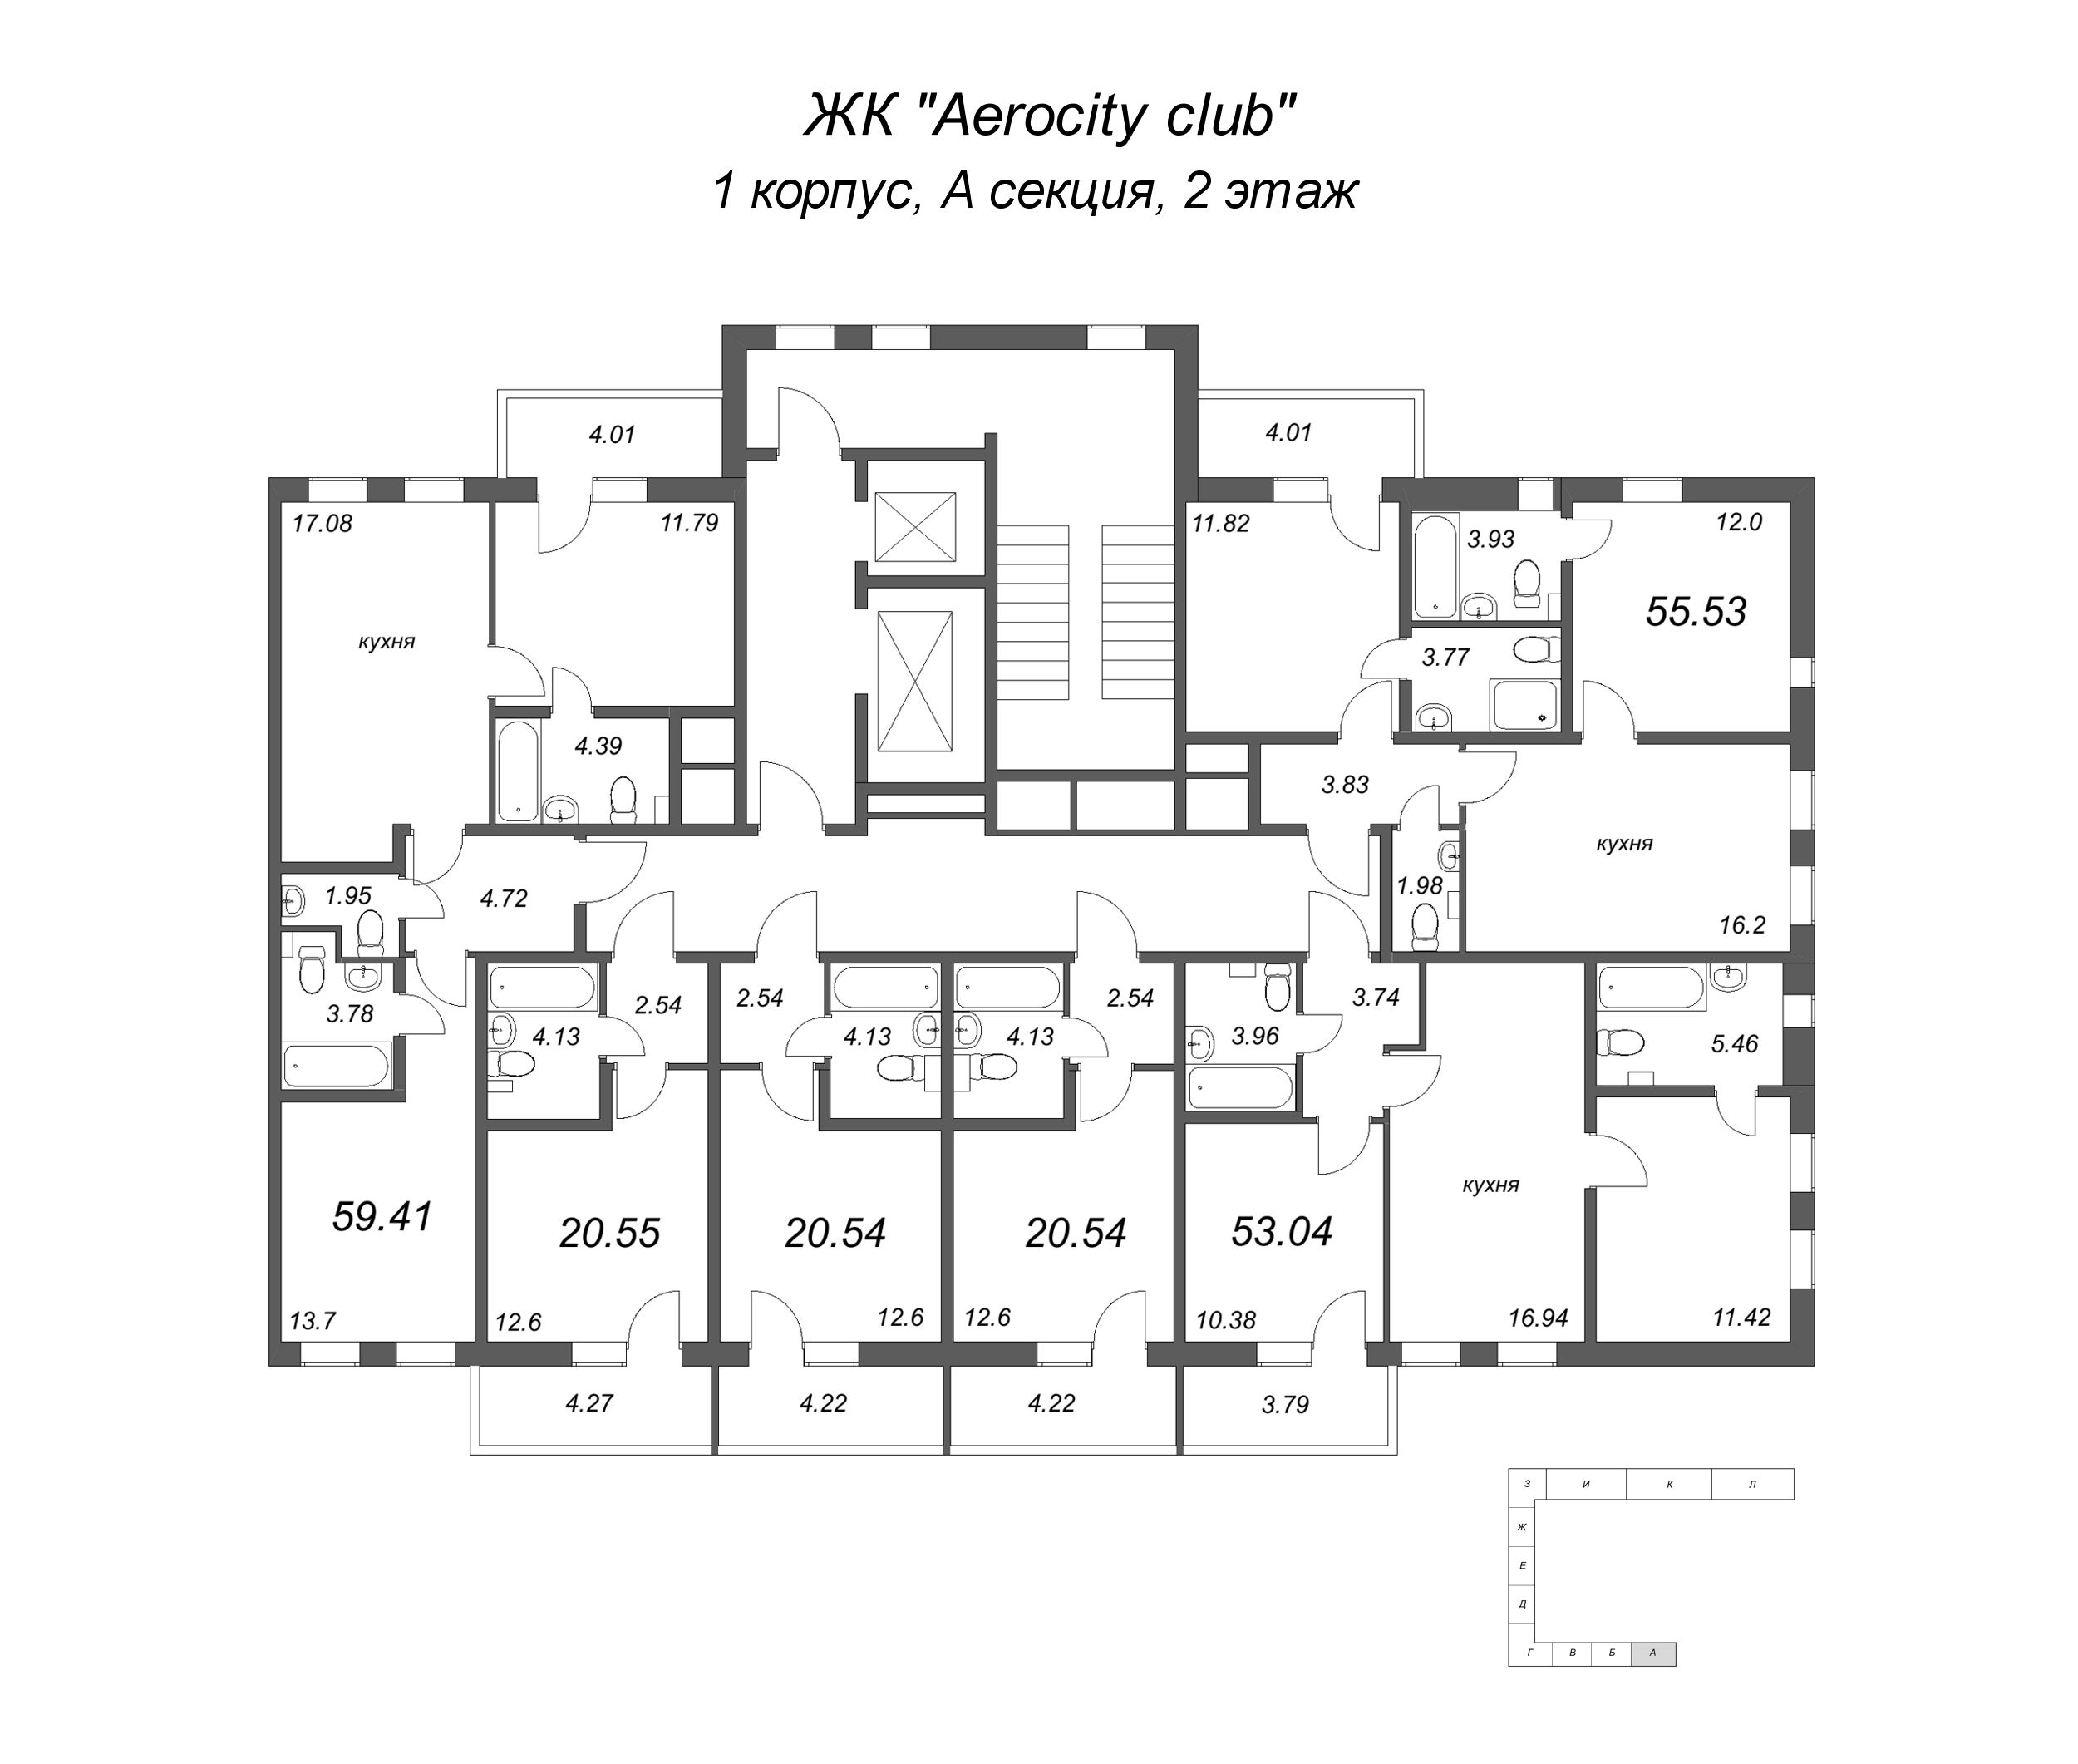 3-комнатная (Евро) квартира, 59.41 м² - планировка этажа